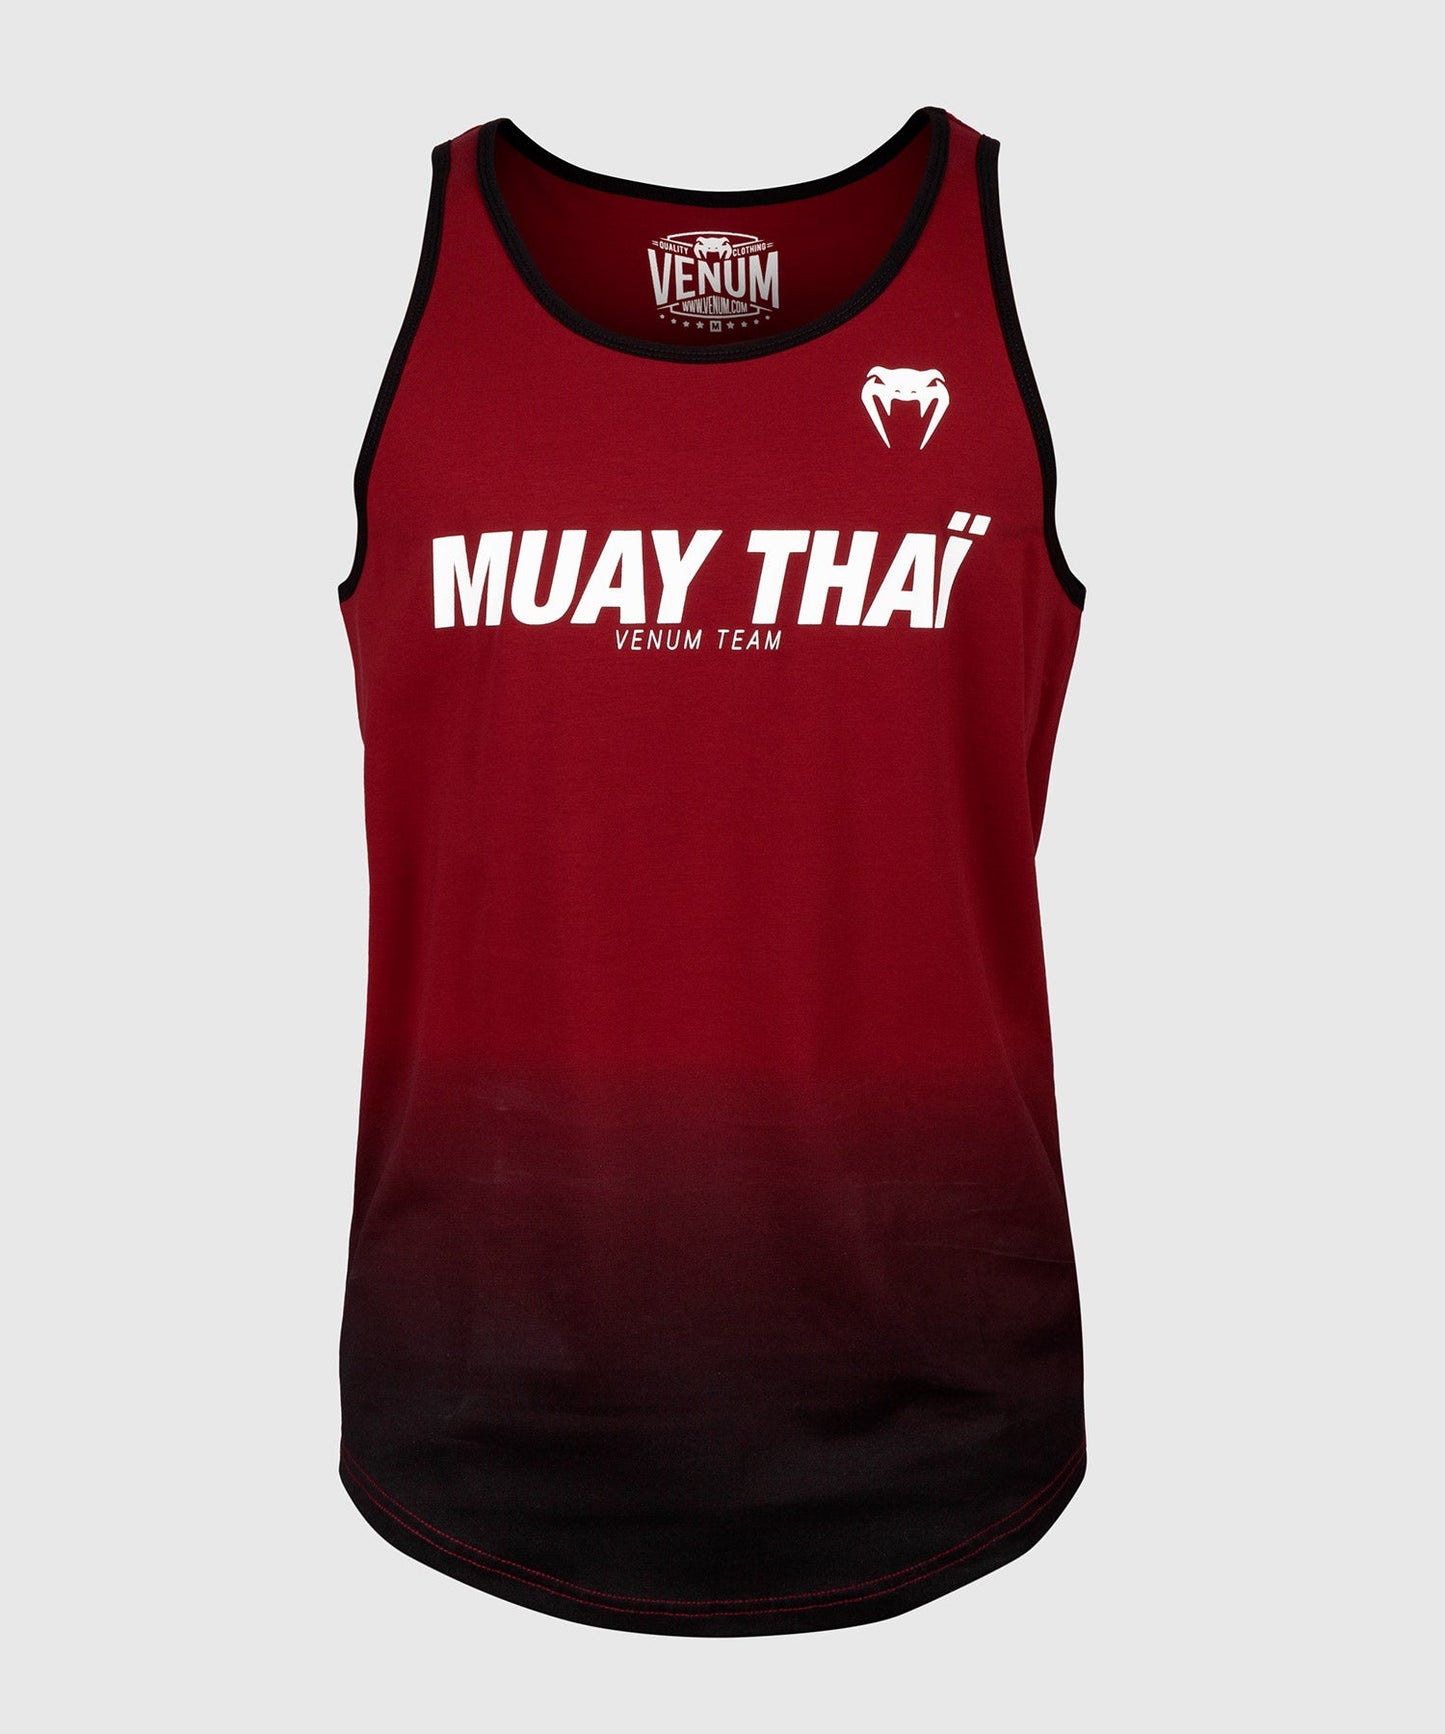 Venum Muay Thai VT Tank Top - Red Wine/Black